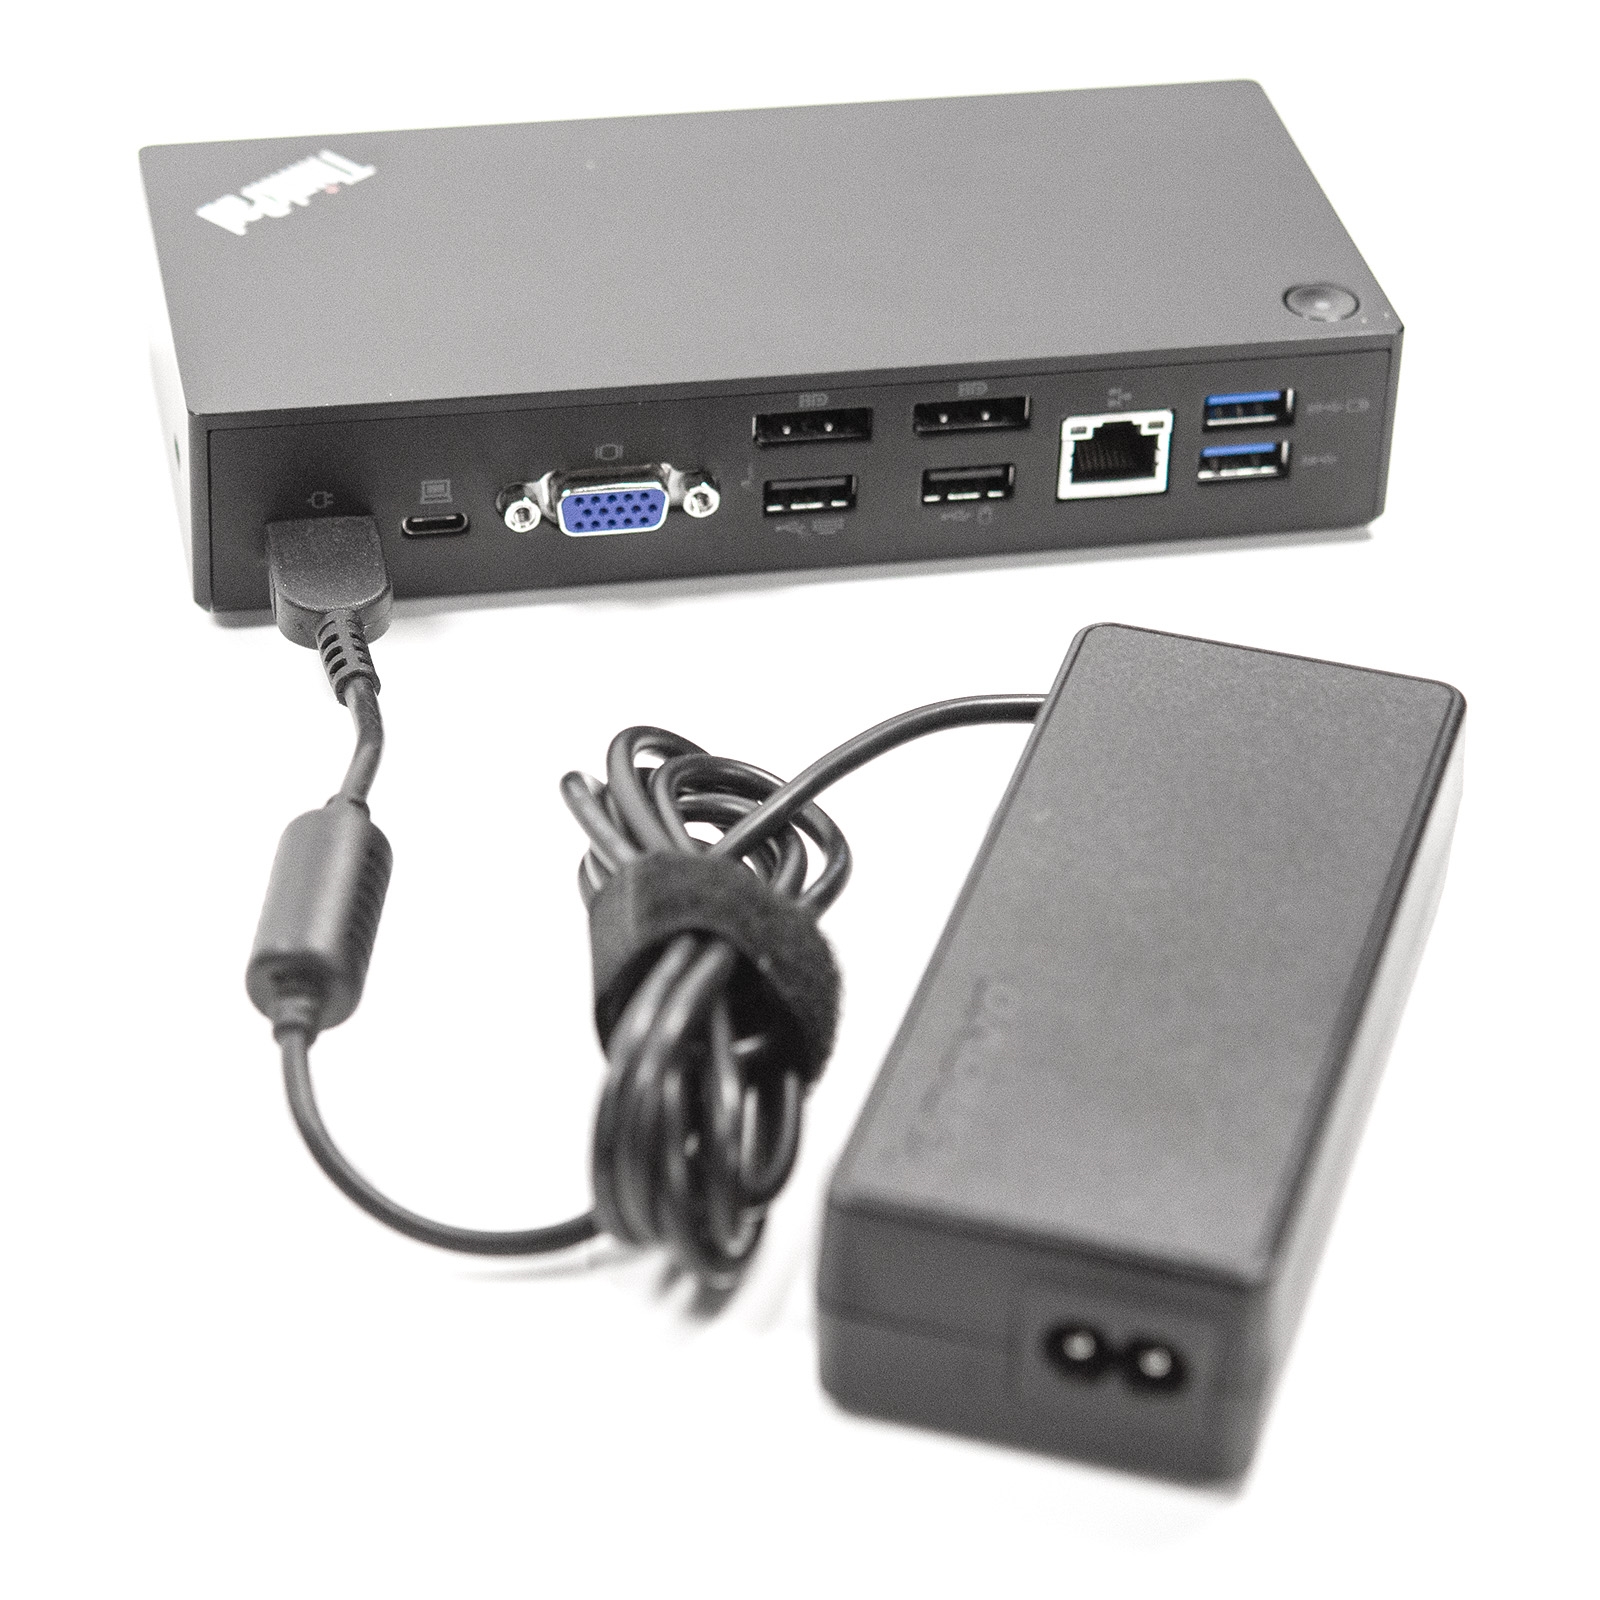 Restored Lenovo ThinkPad USB-C Dock 40A9 DK1633 Laptop Docking Station 40A90090US SD20L36276 03X7194 w/ USB-C Cable & 90w AC Adapter (Refurbished) - image 5 of 8